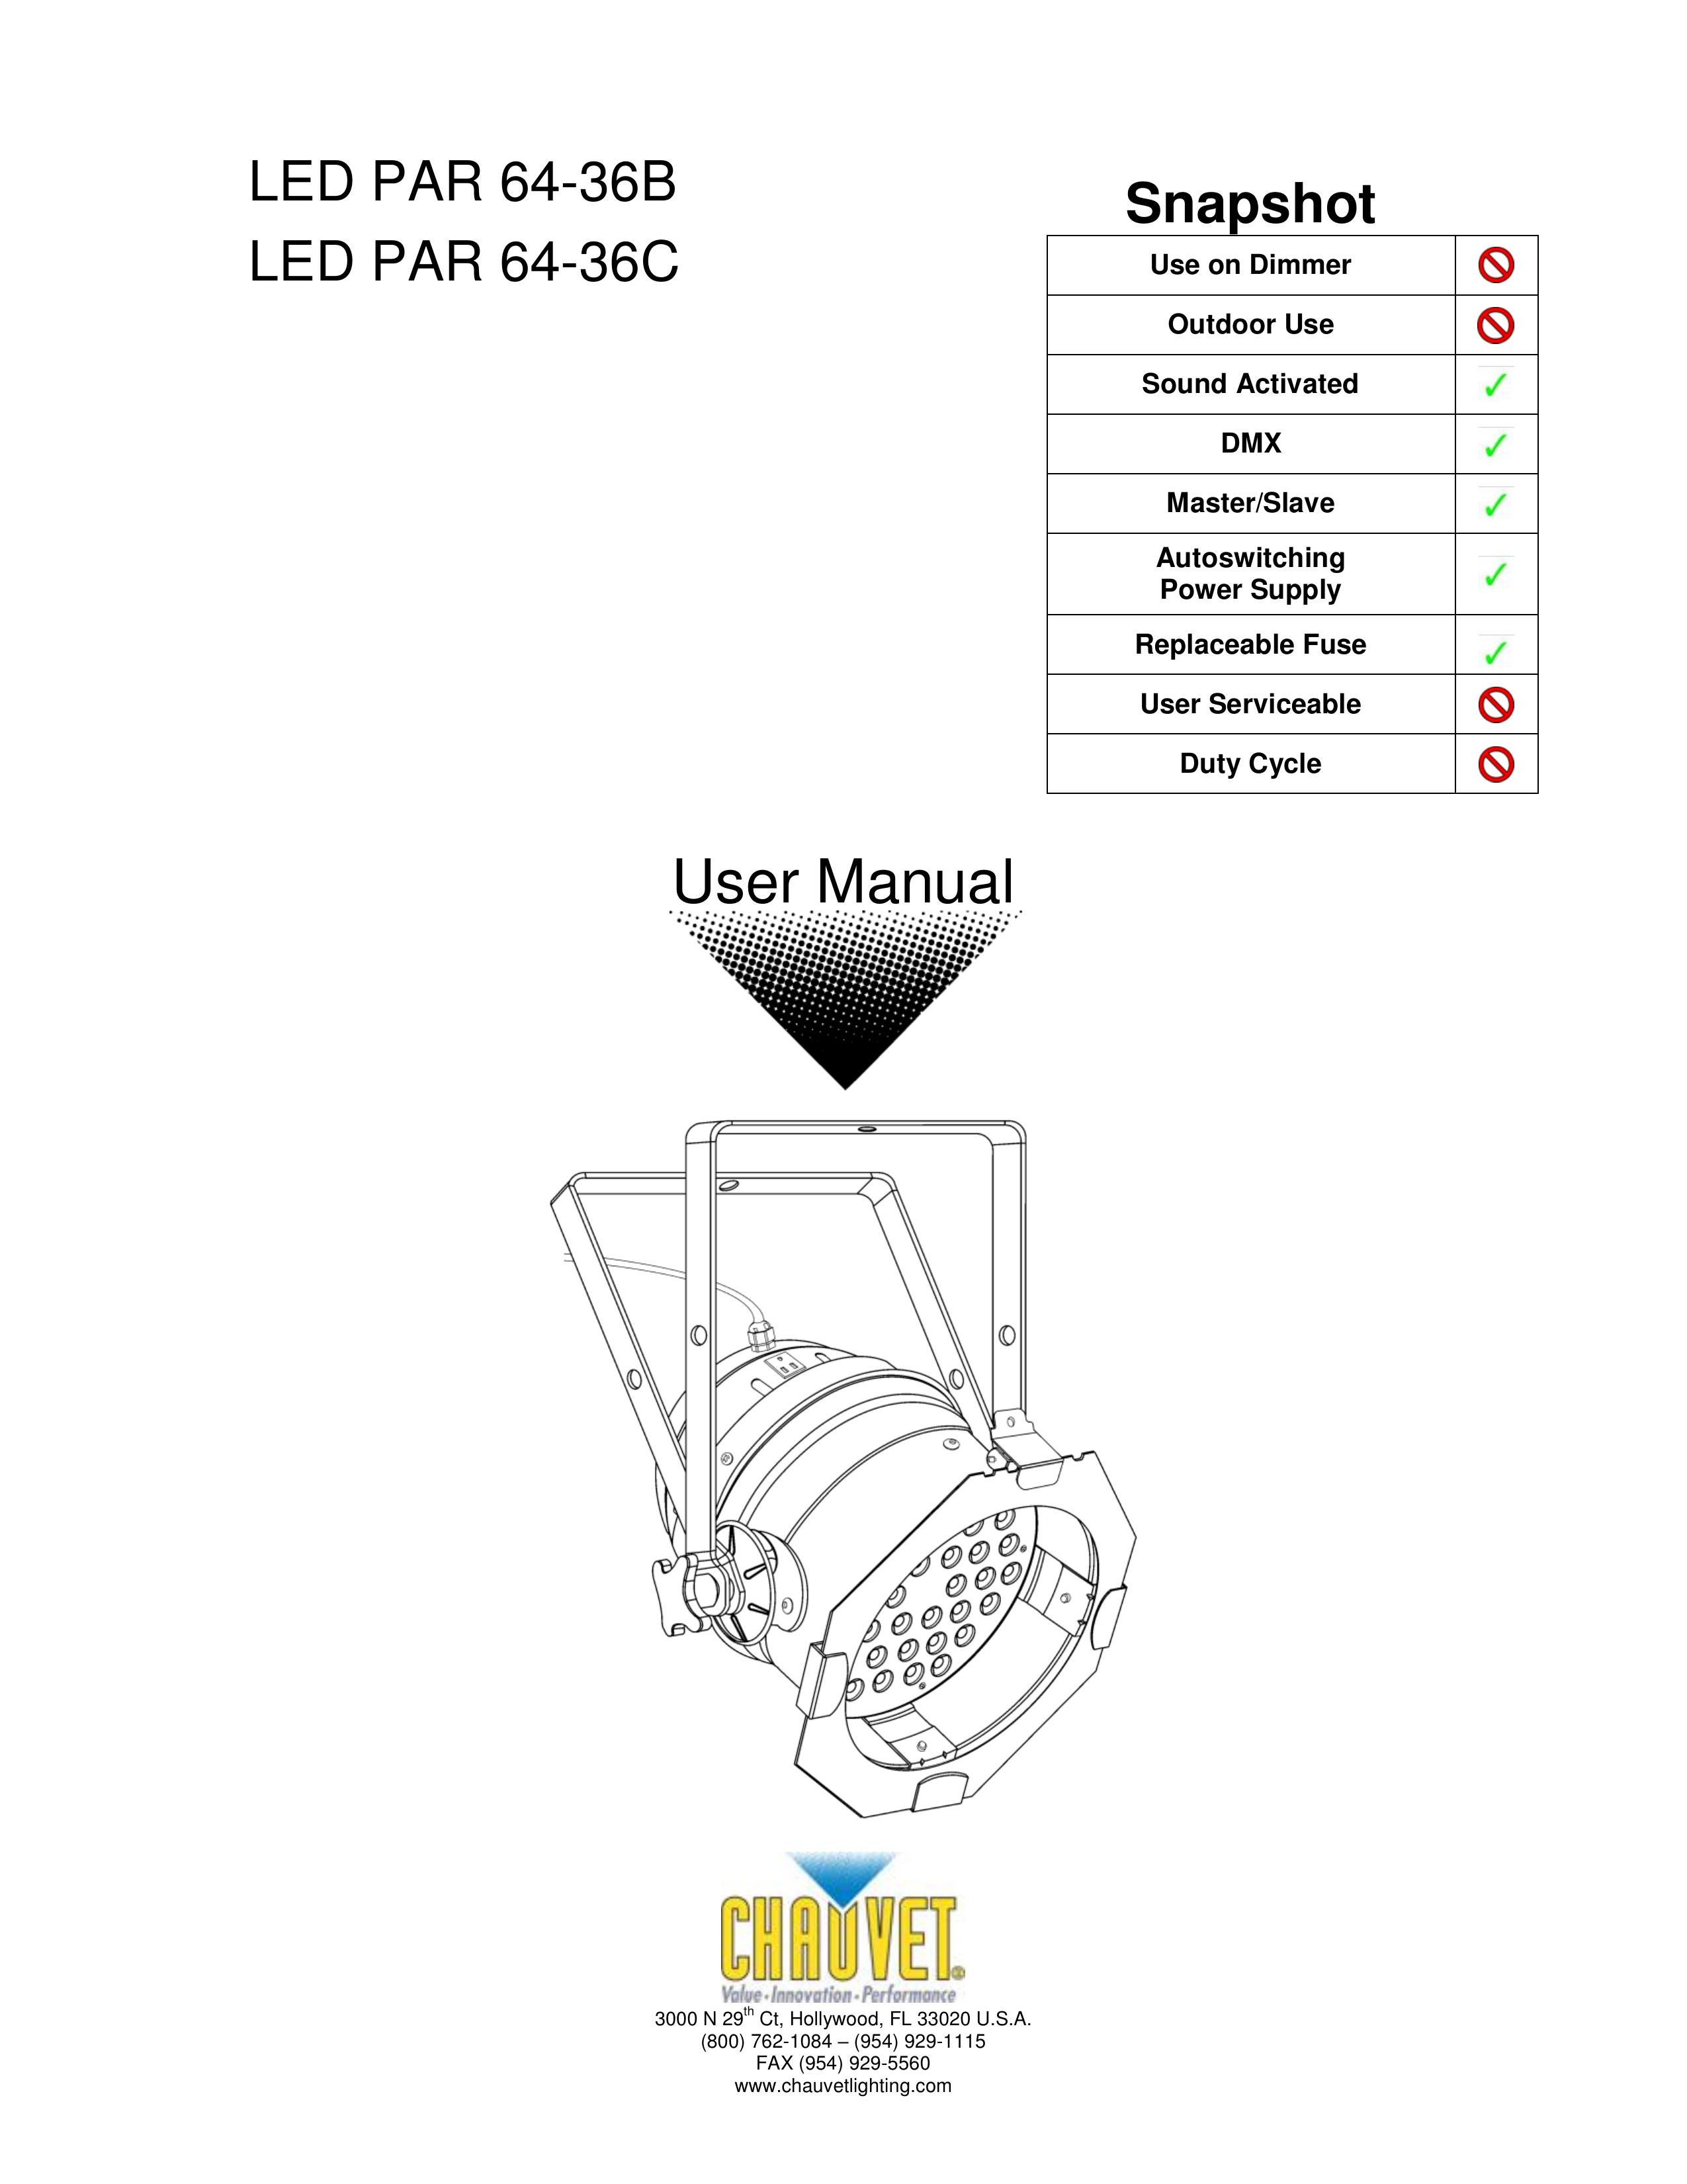 Chauvet LED PAR 64-36B Camera Accessories User Manual